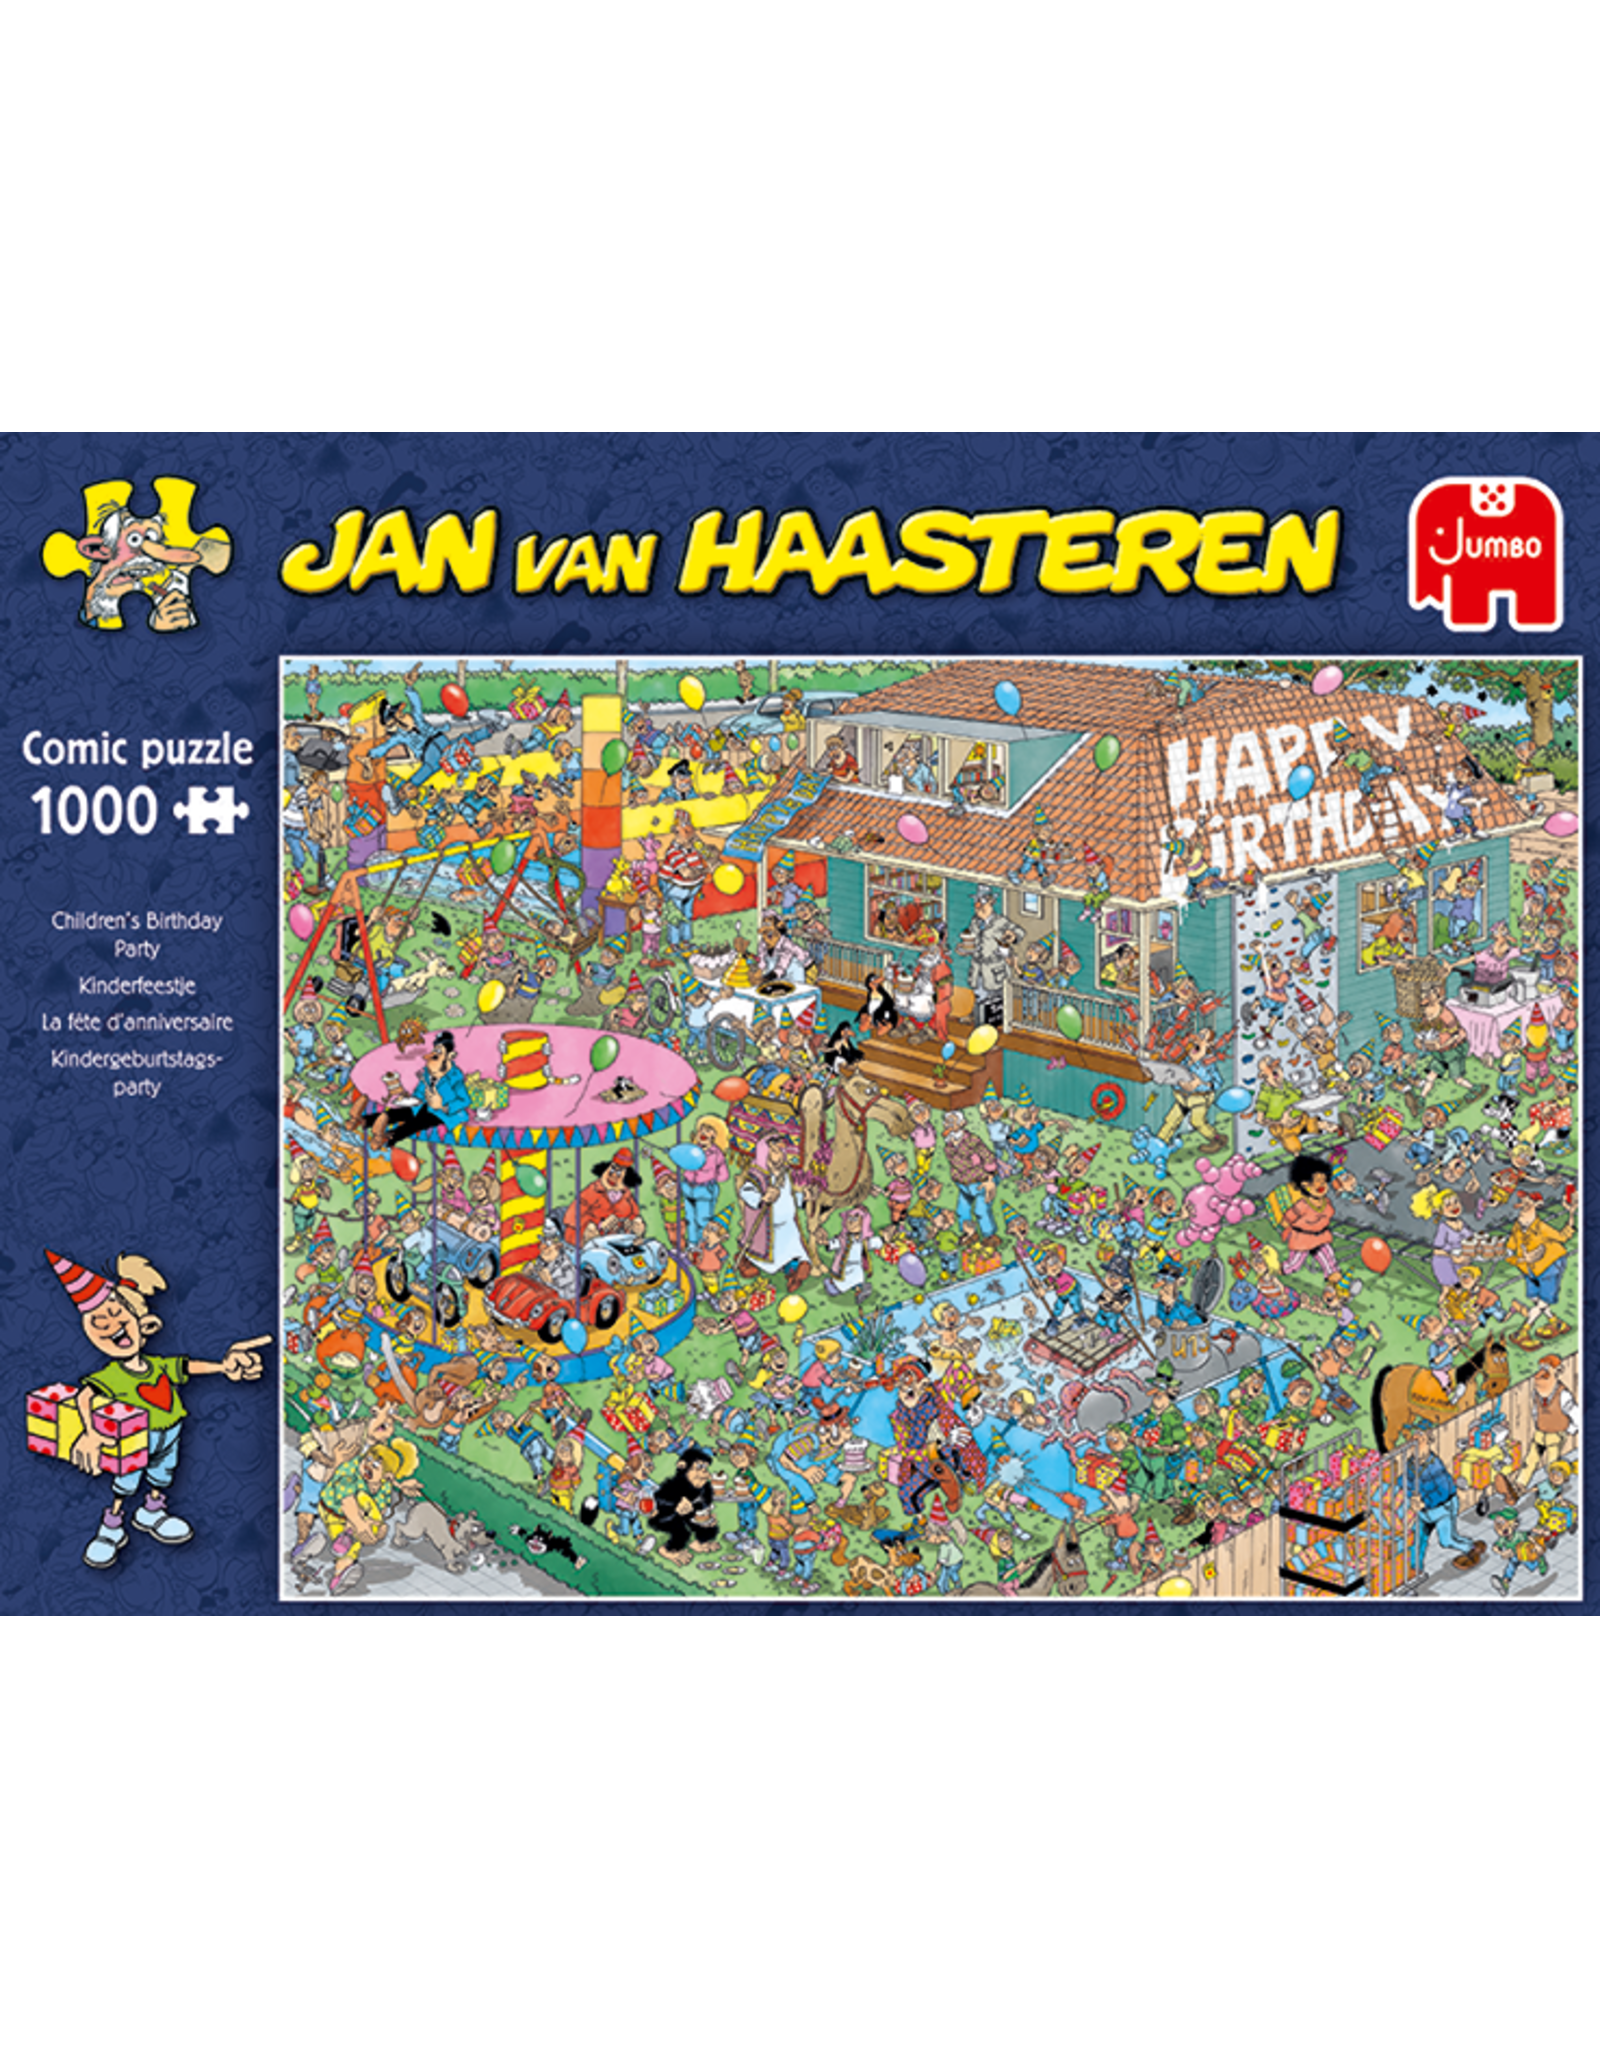 Jumbo Casse-Tête Jan van Haasteren 1000 pcs - La fête d'anniversaire